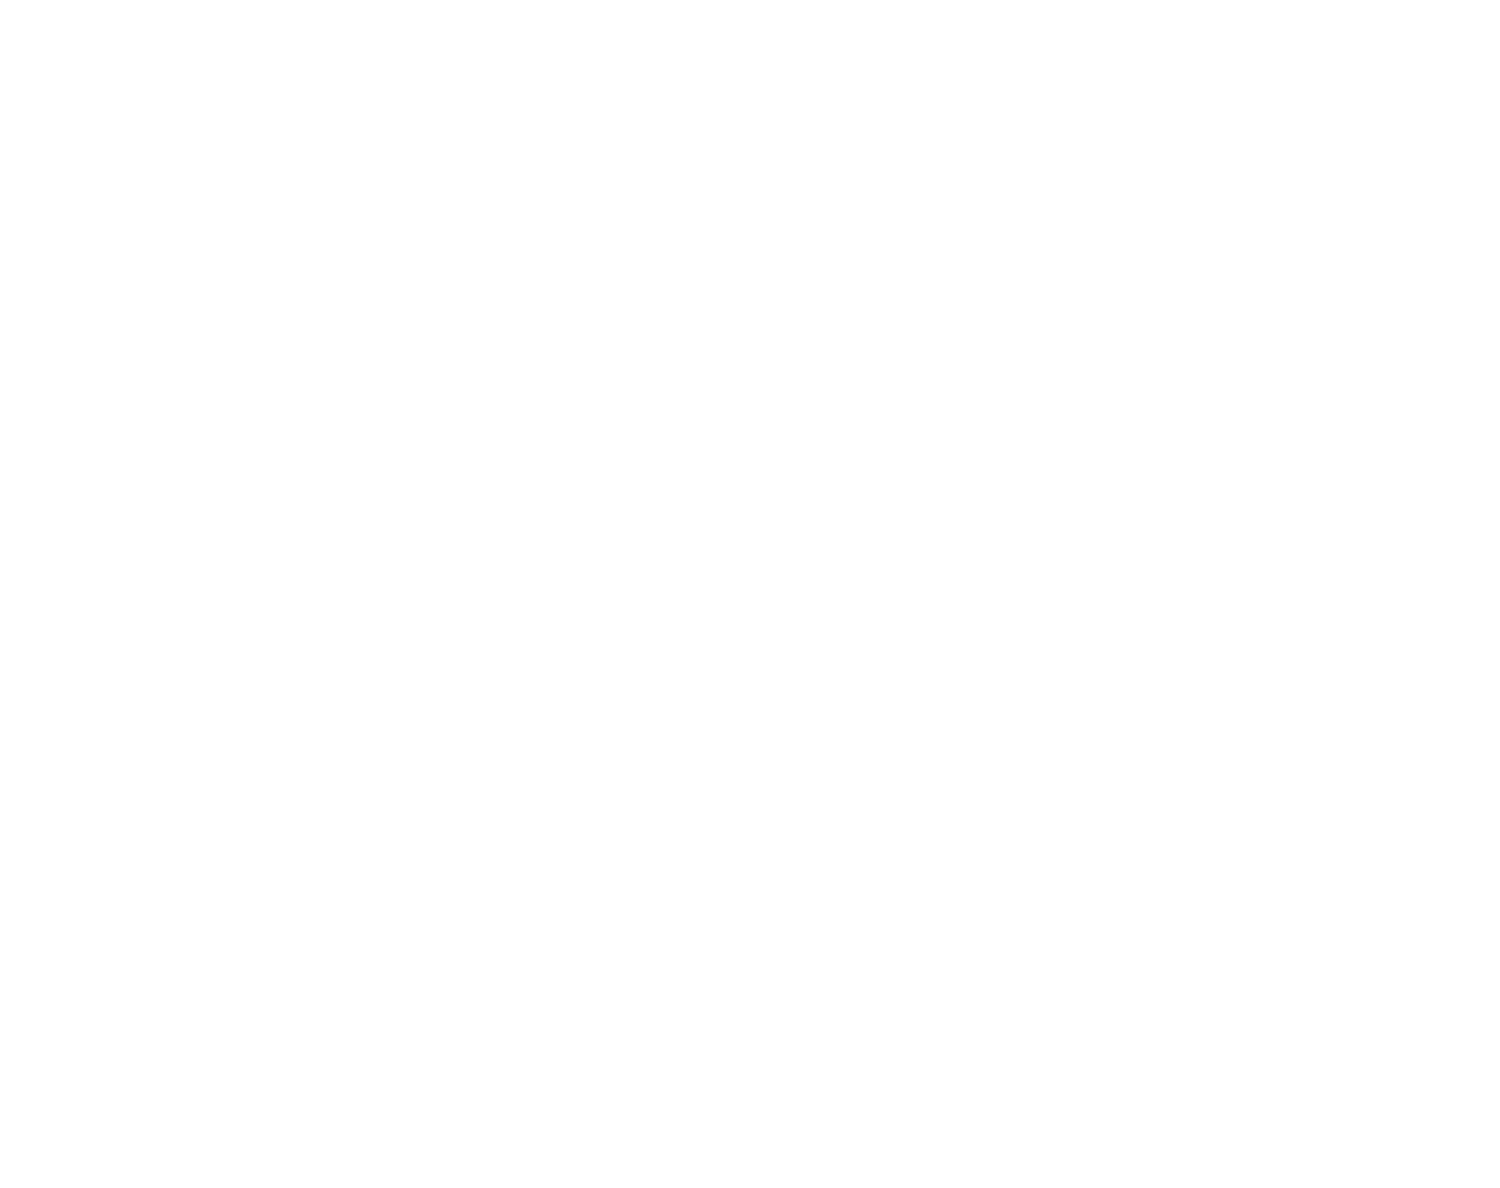 Eugene Toriko - Luxury travel agency specializing in sustainable tourism